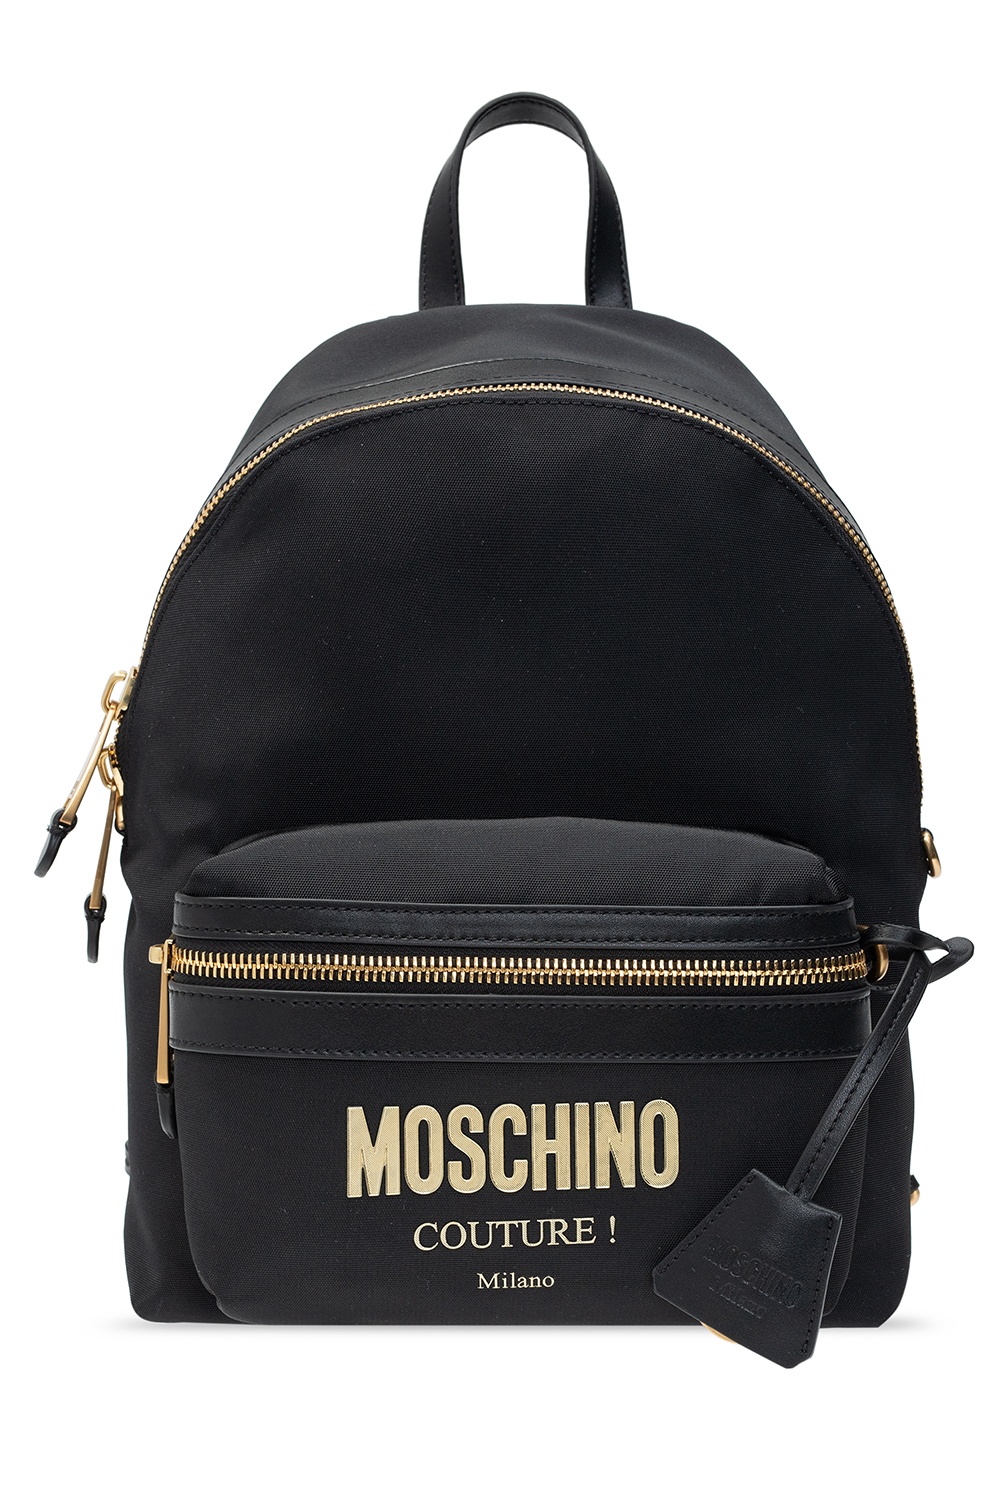 Backpack with logo Moschino - Vitkac 